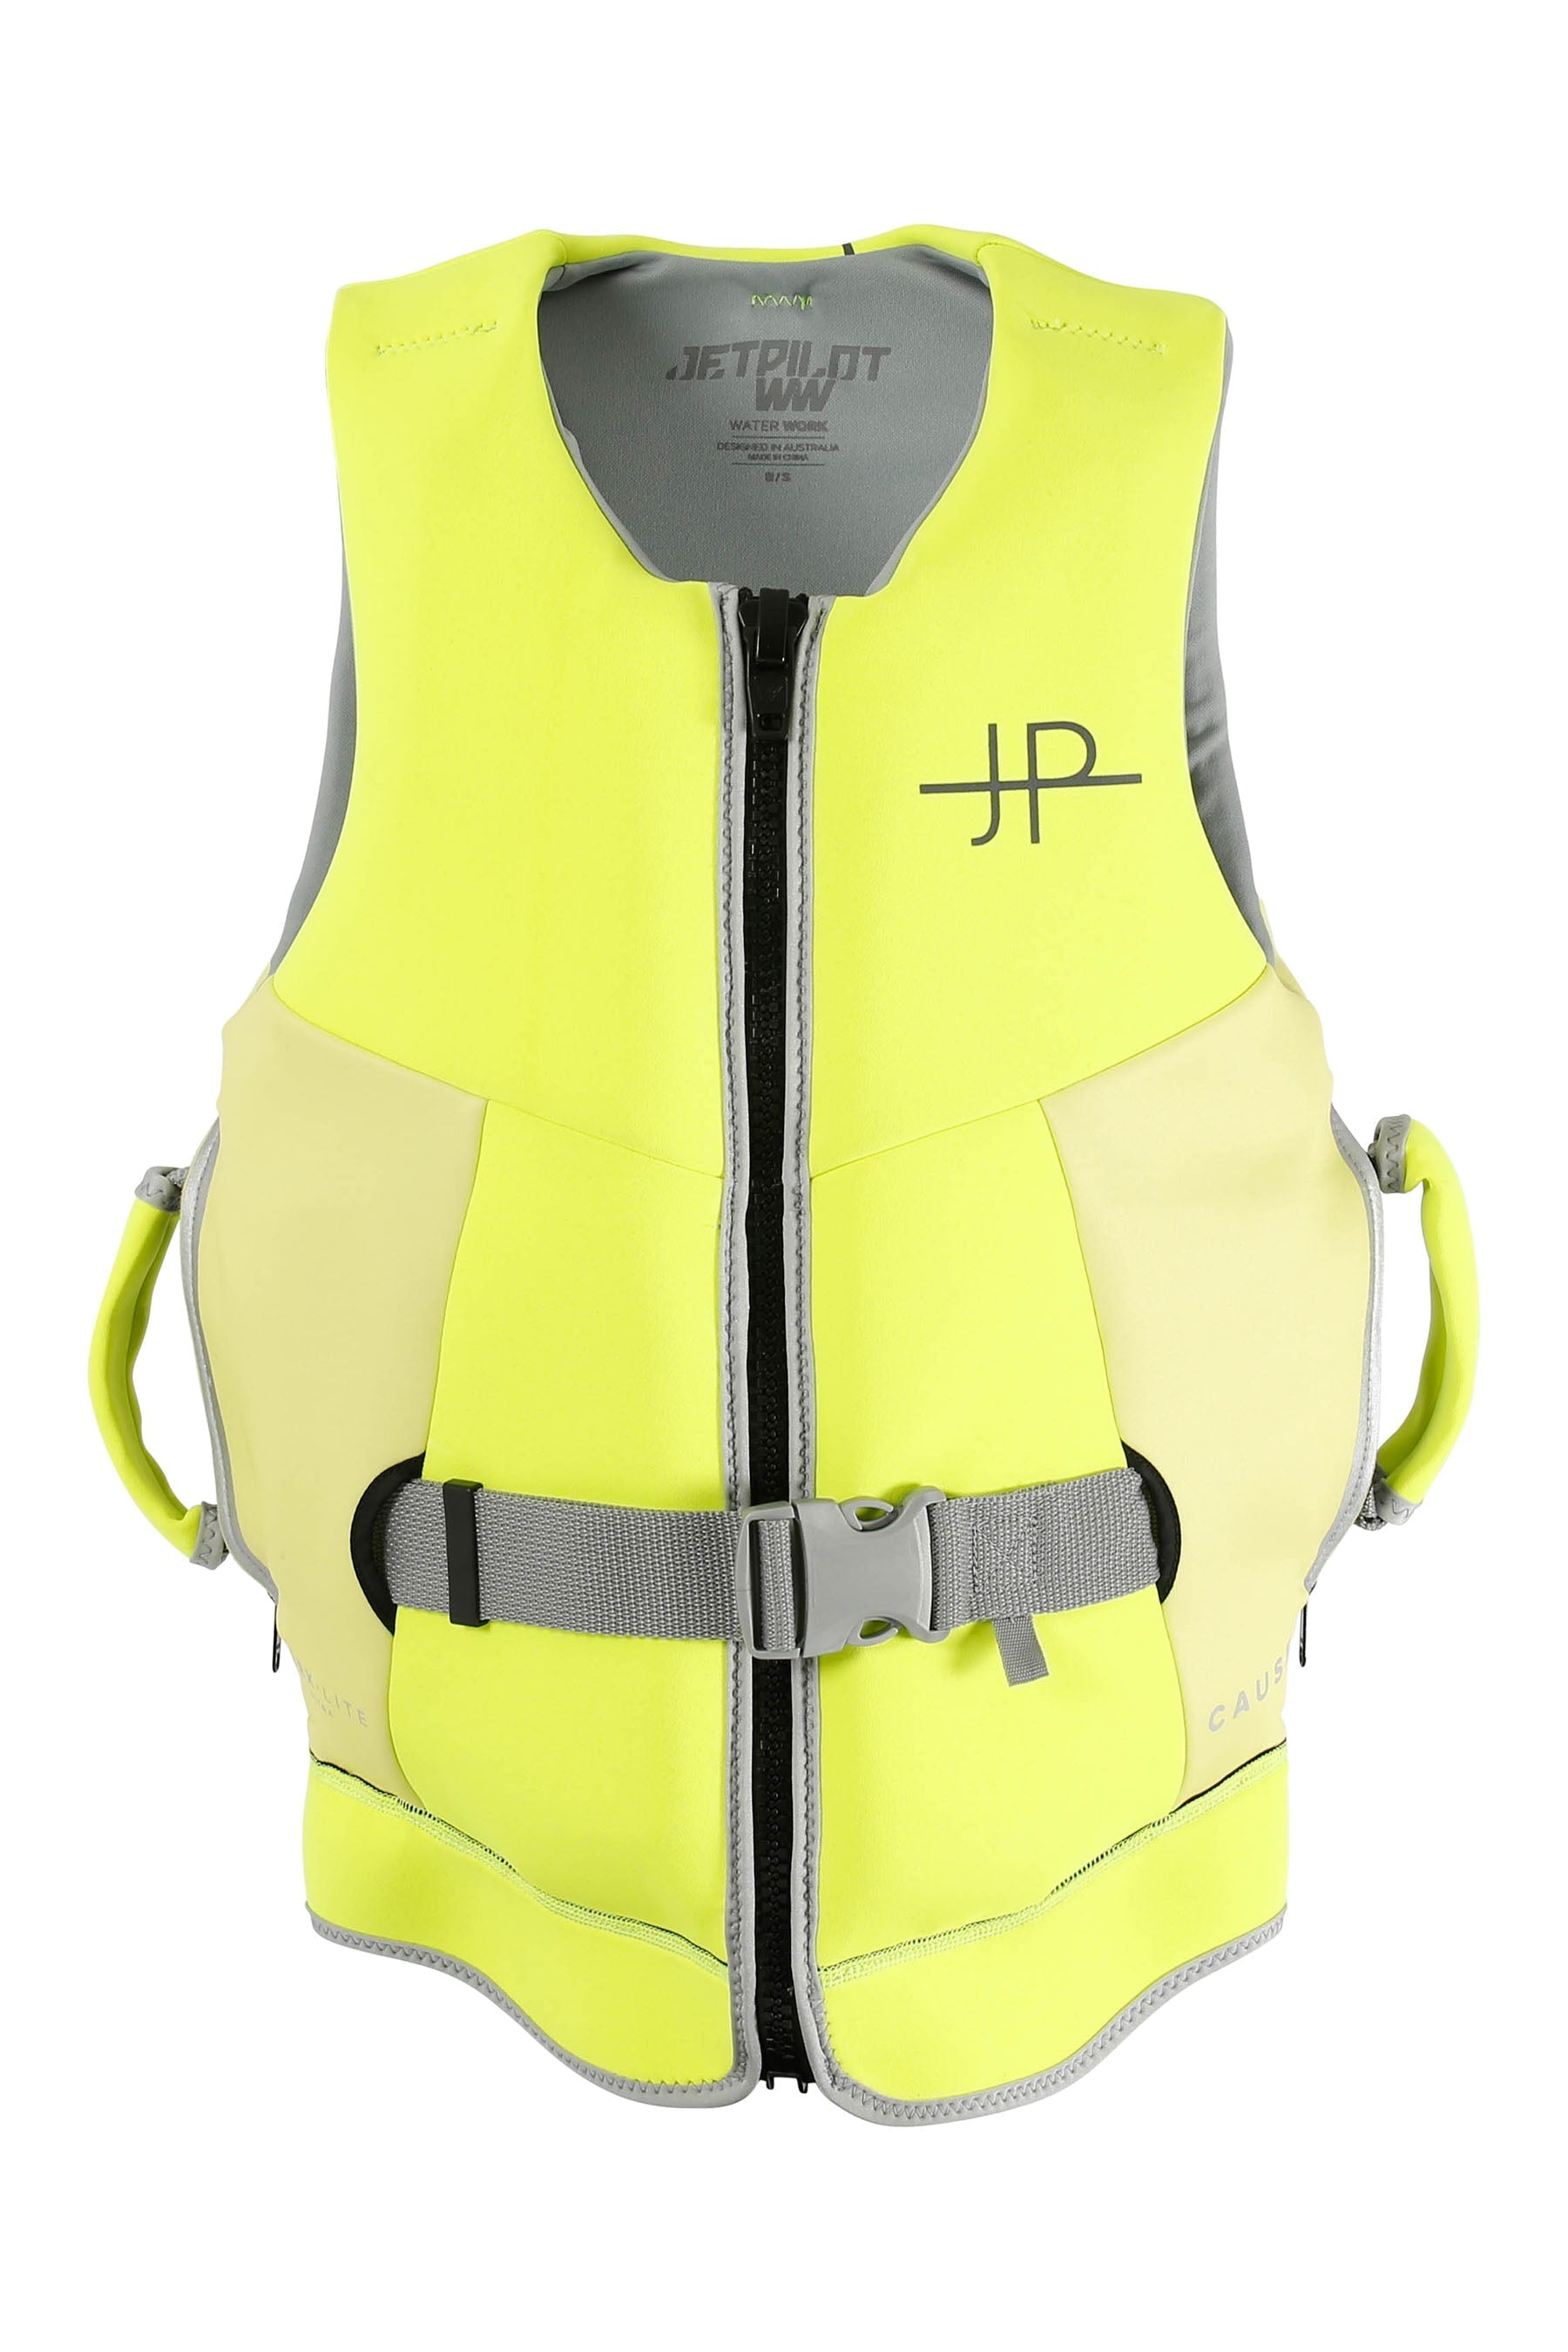 Jetpilot Cause F/E Ladies Neo Life Jacket - L50 Yellow 4